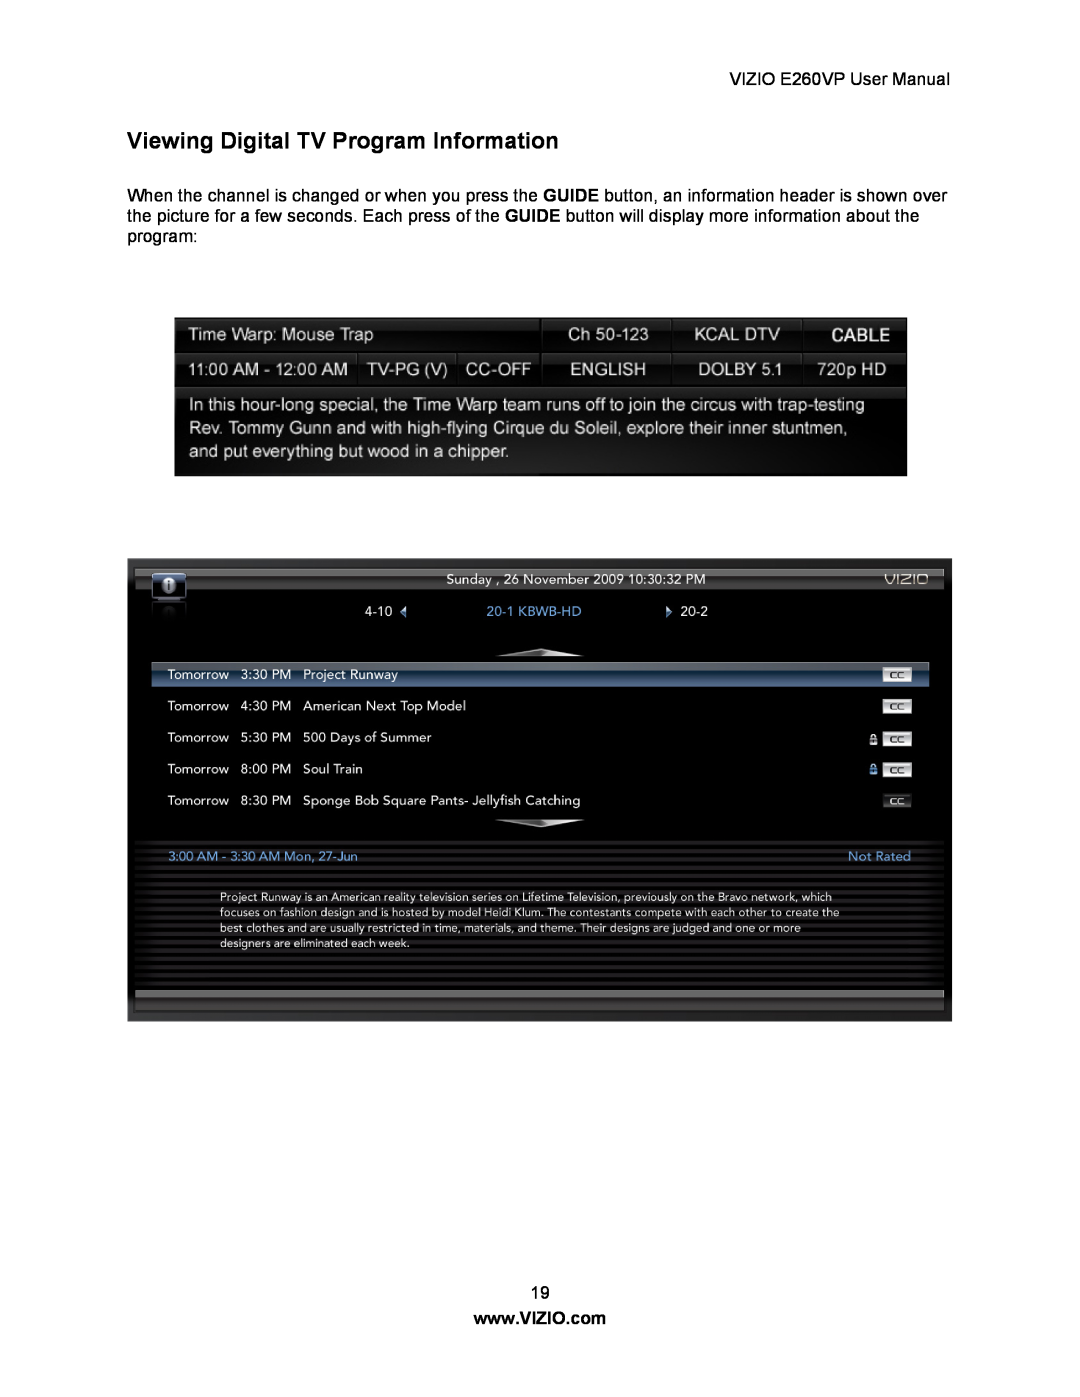 Vizio user manual Viewing Digital TV Program Information, VIZIO E260VP User Manual 